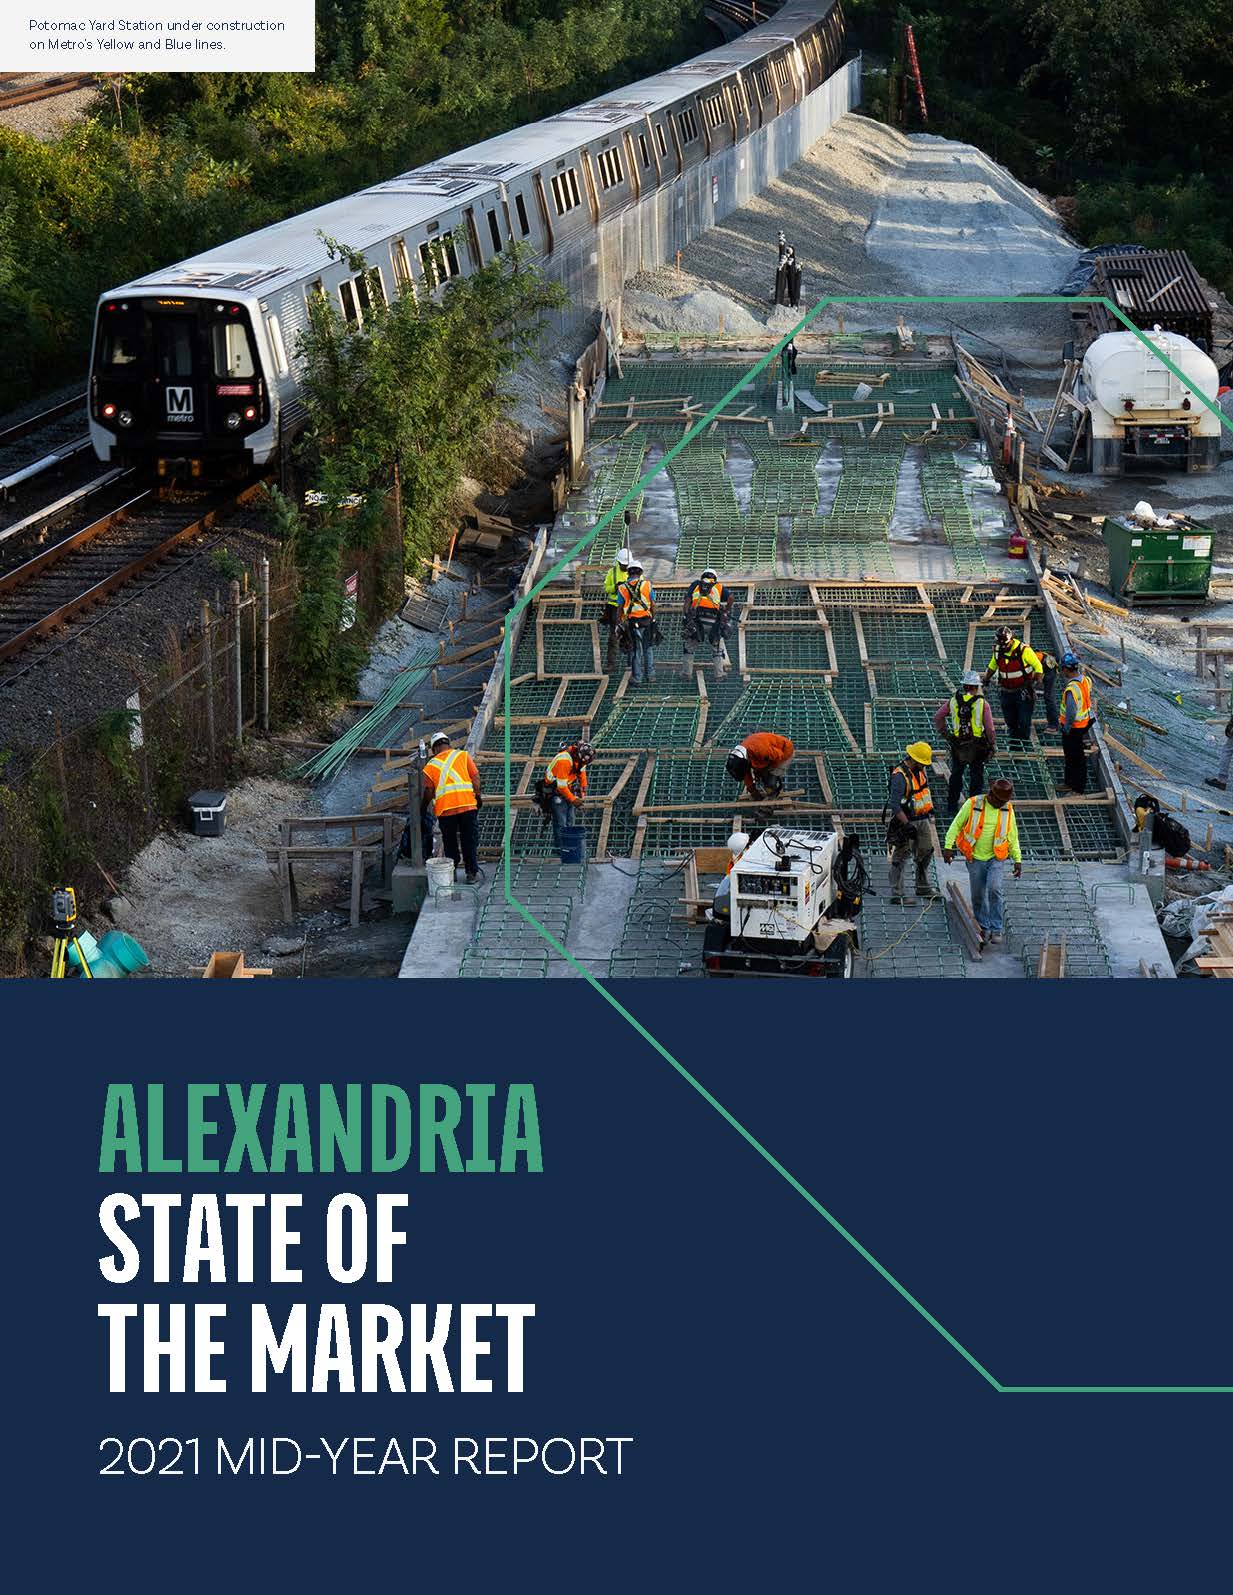 2021 Alexandria Mid-Year Market Report